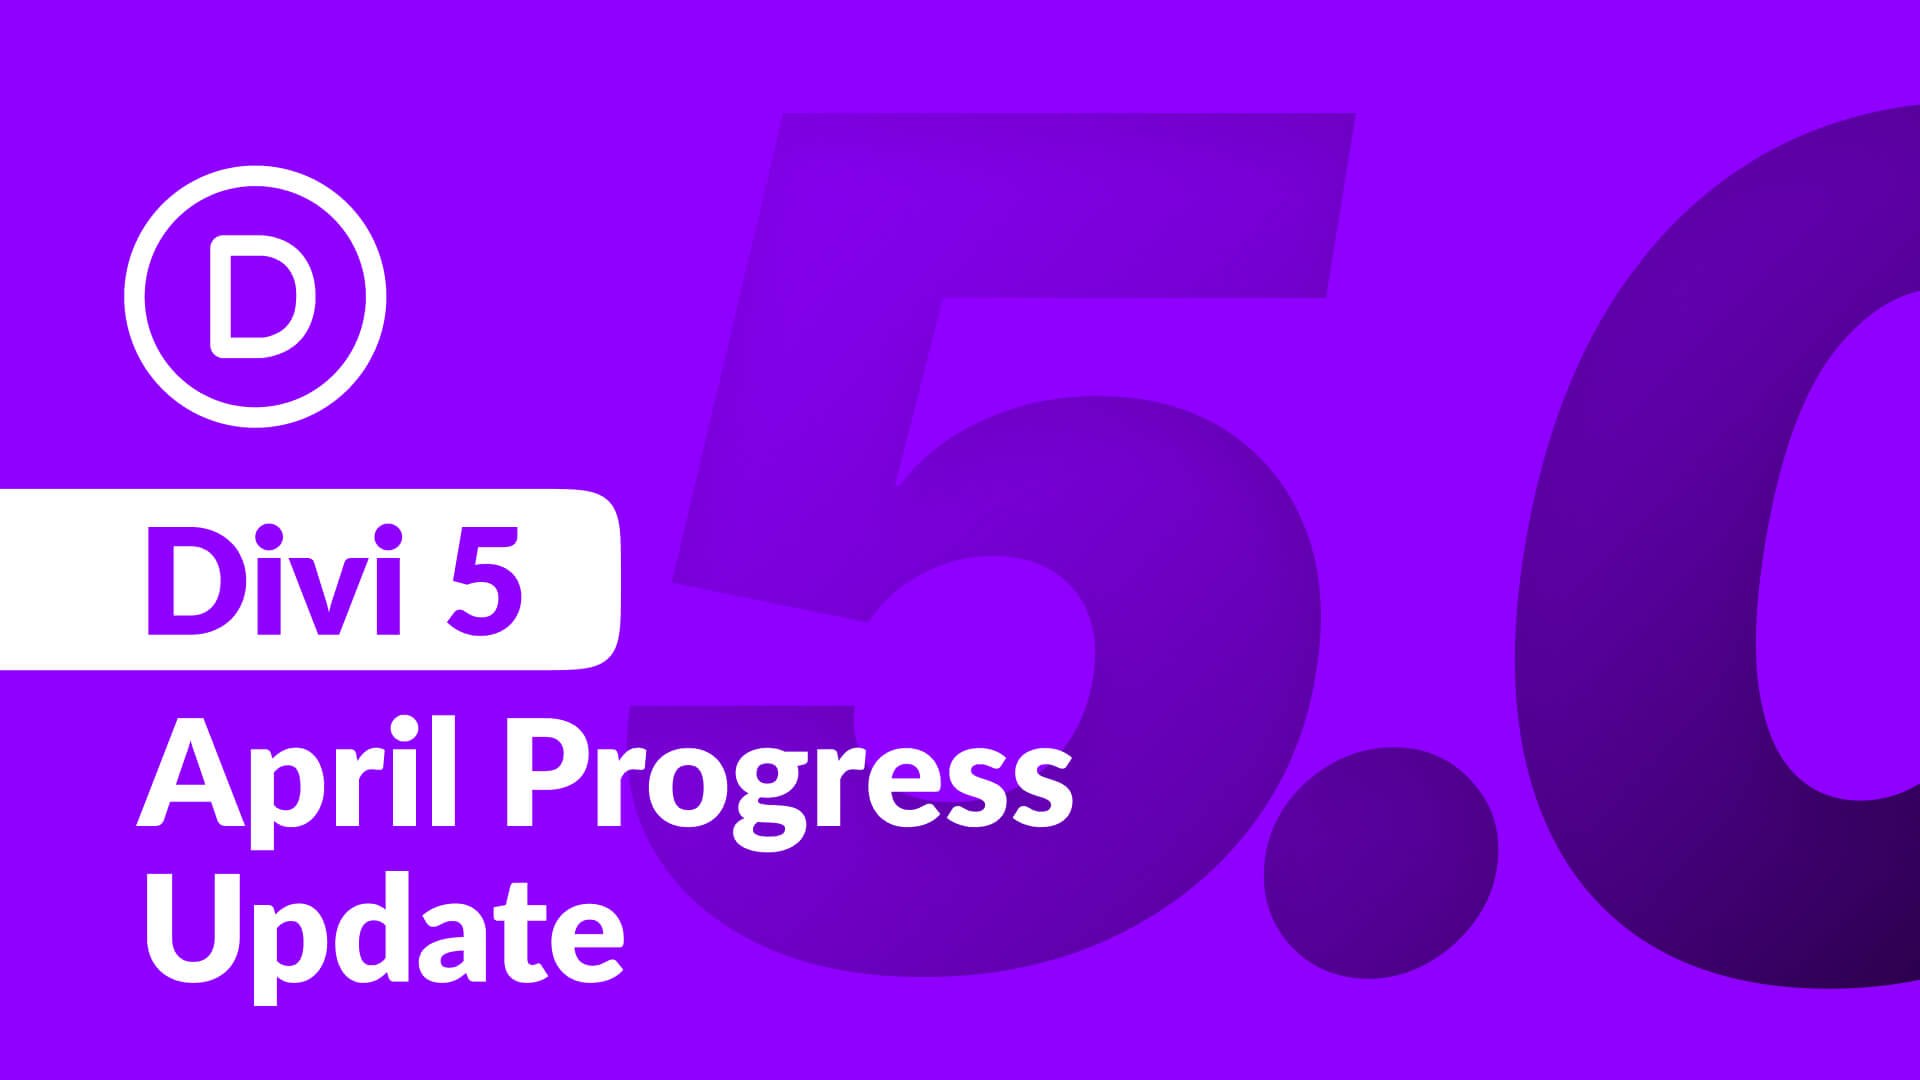 Divi 5 April Progress Update: Strengthening The Foundation